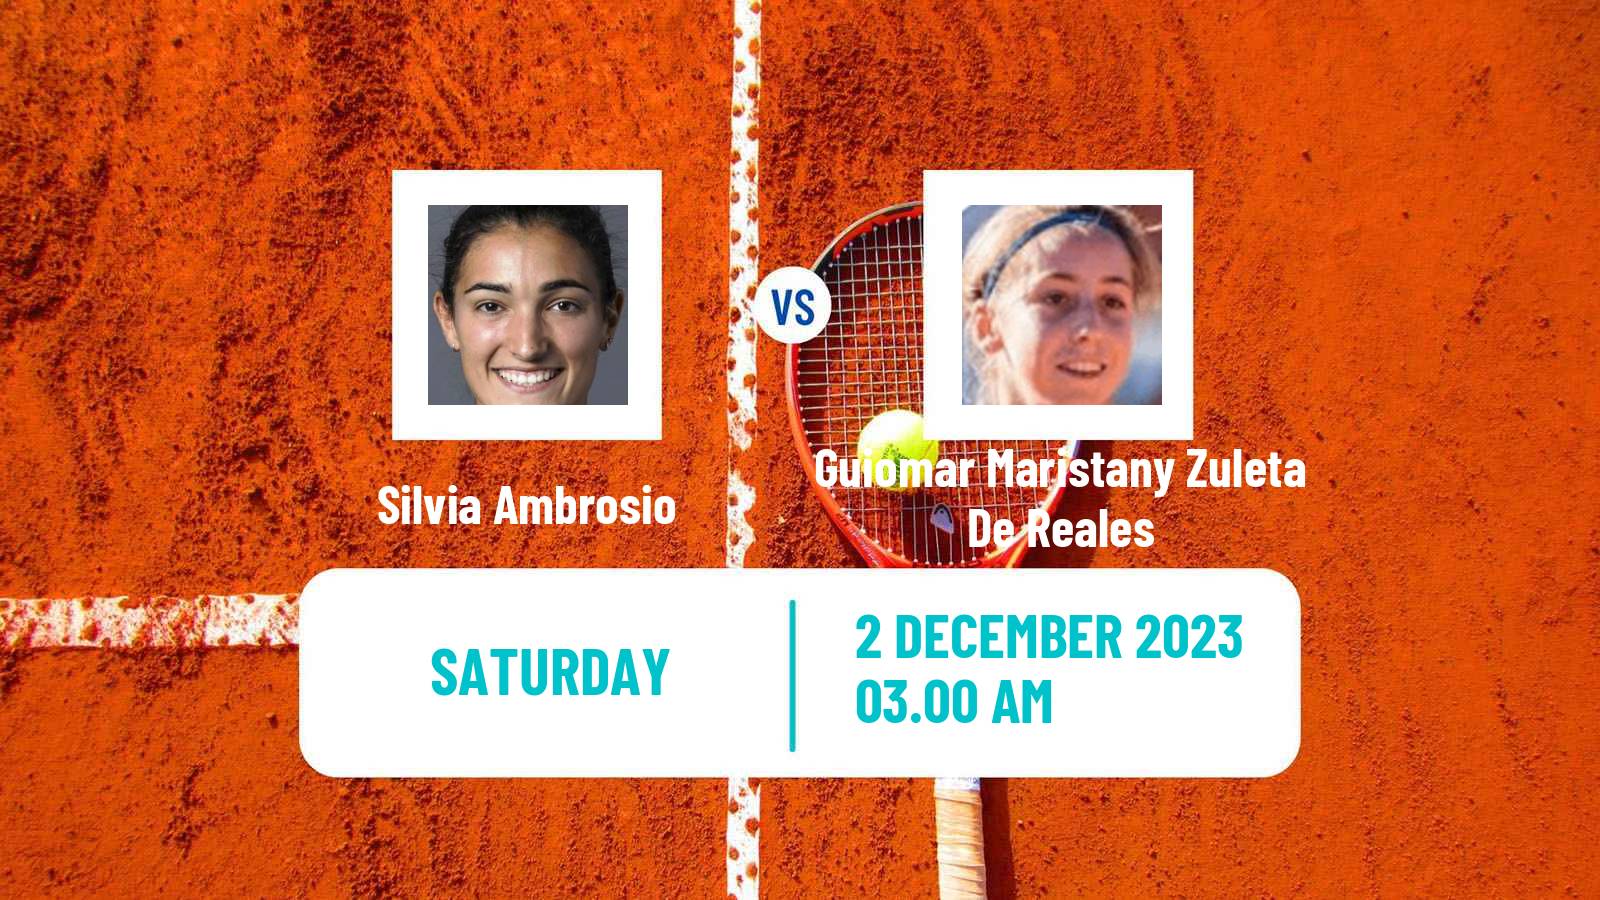 Tennis ITF W25 Limassol 2 Women Silvia Ambrosio - Guiomar Maristany Zuleta De Reales